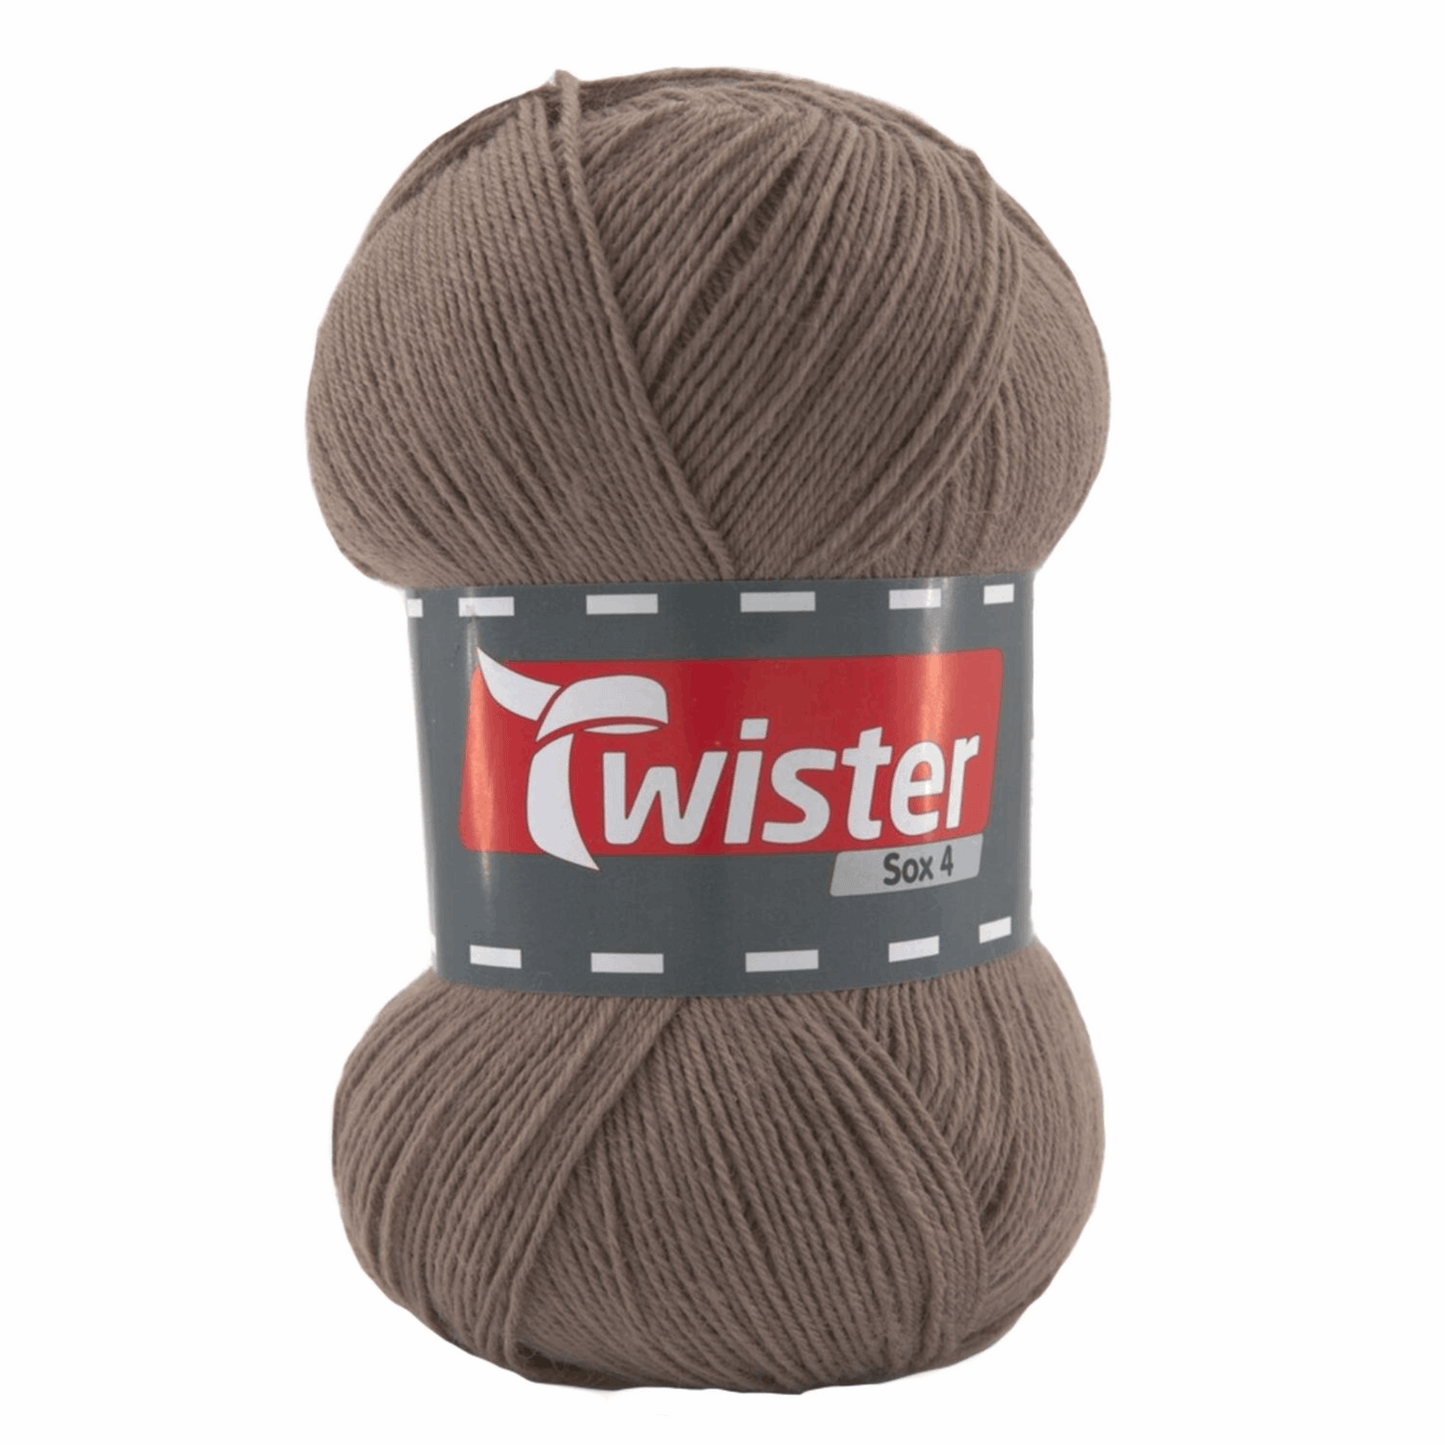 Twister Sox4, 100g, 98305, Farbe beige 84